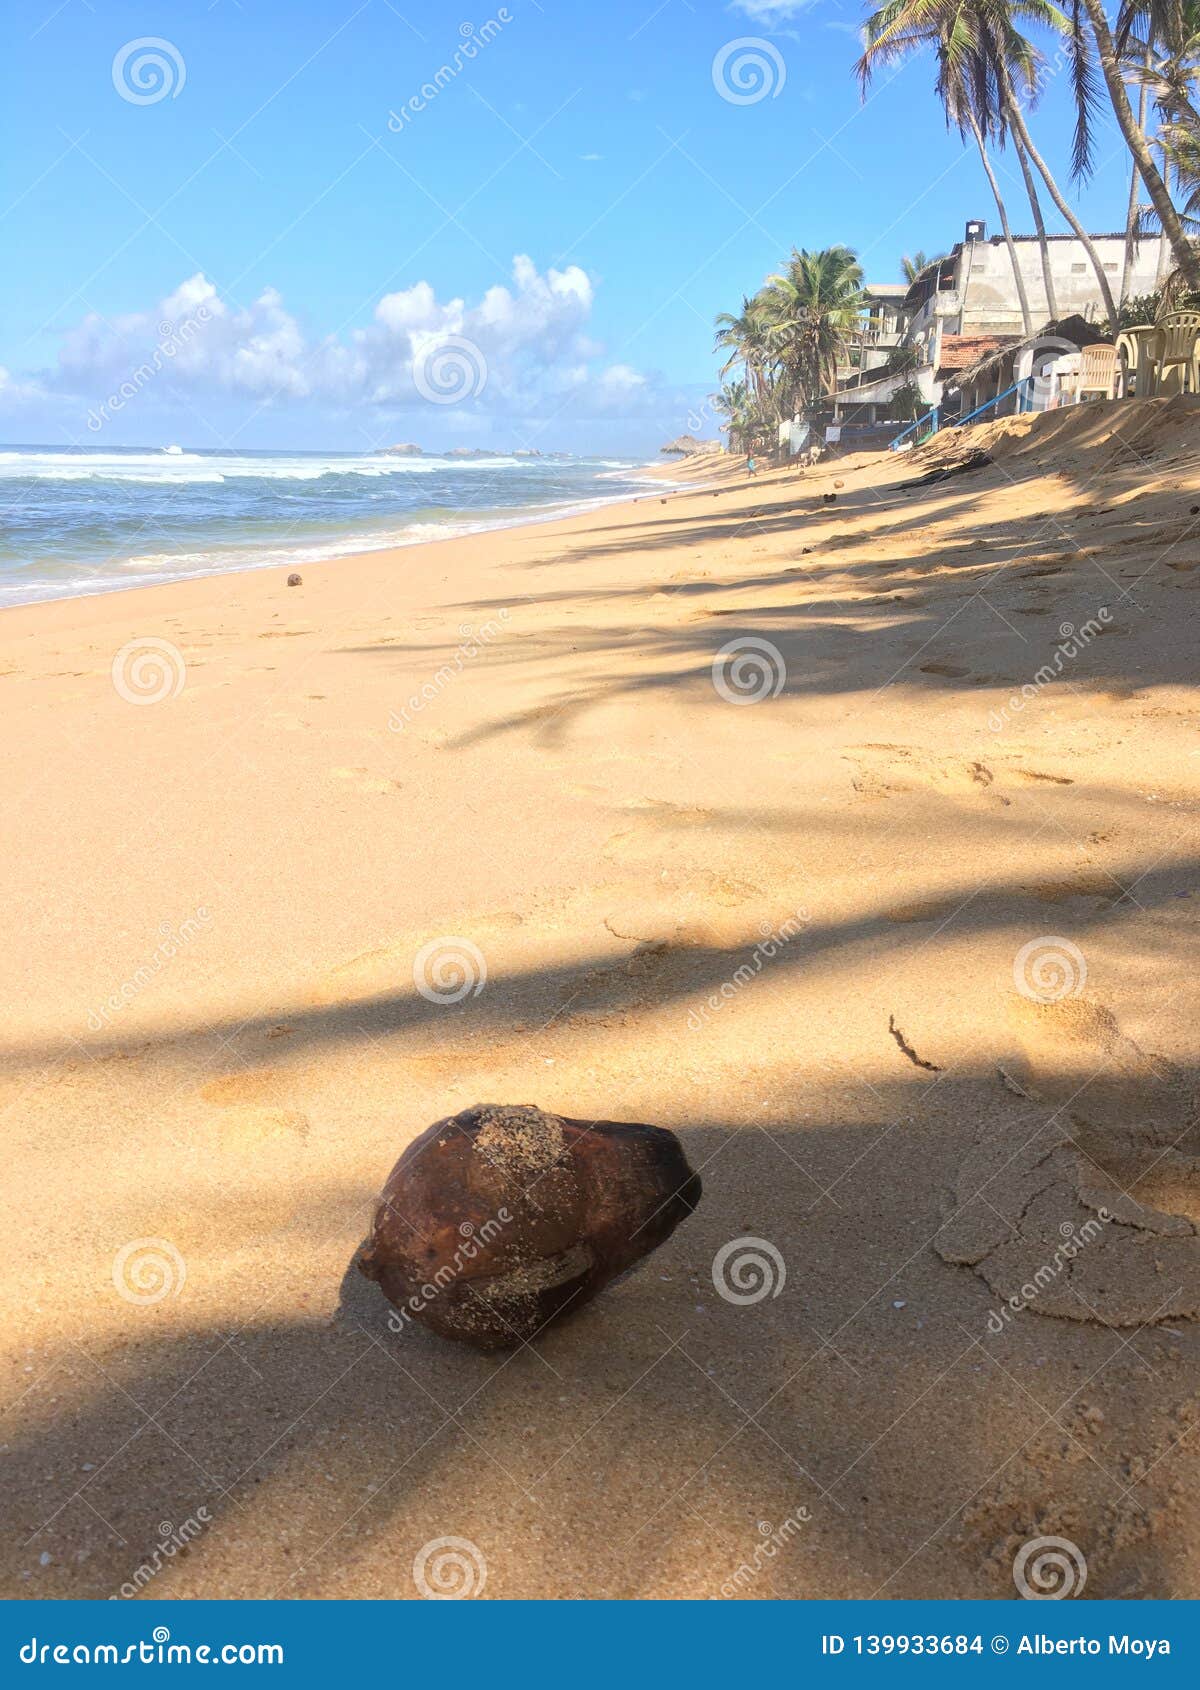 coconut fallen on sri lanka beach